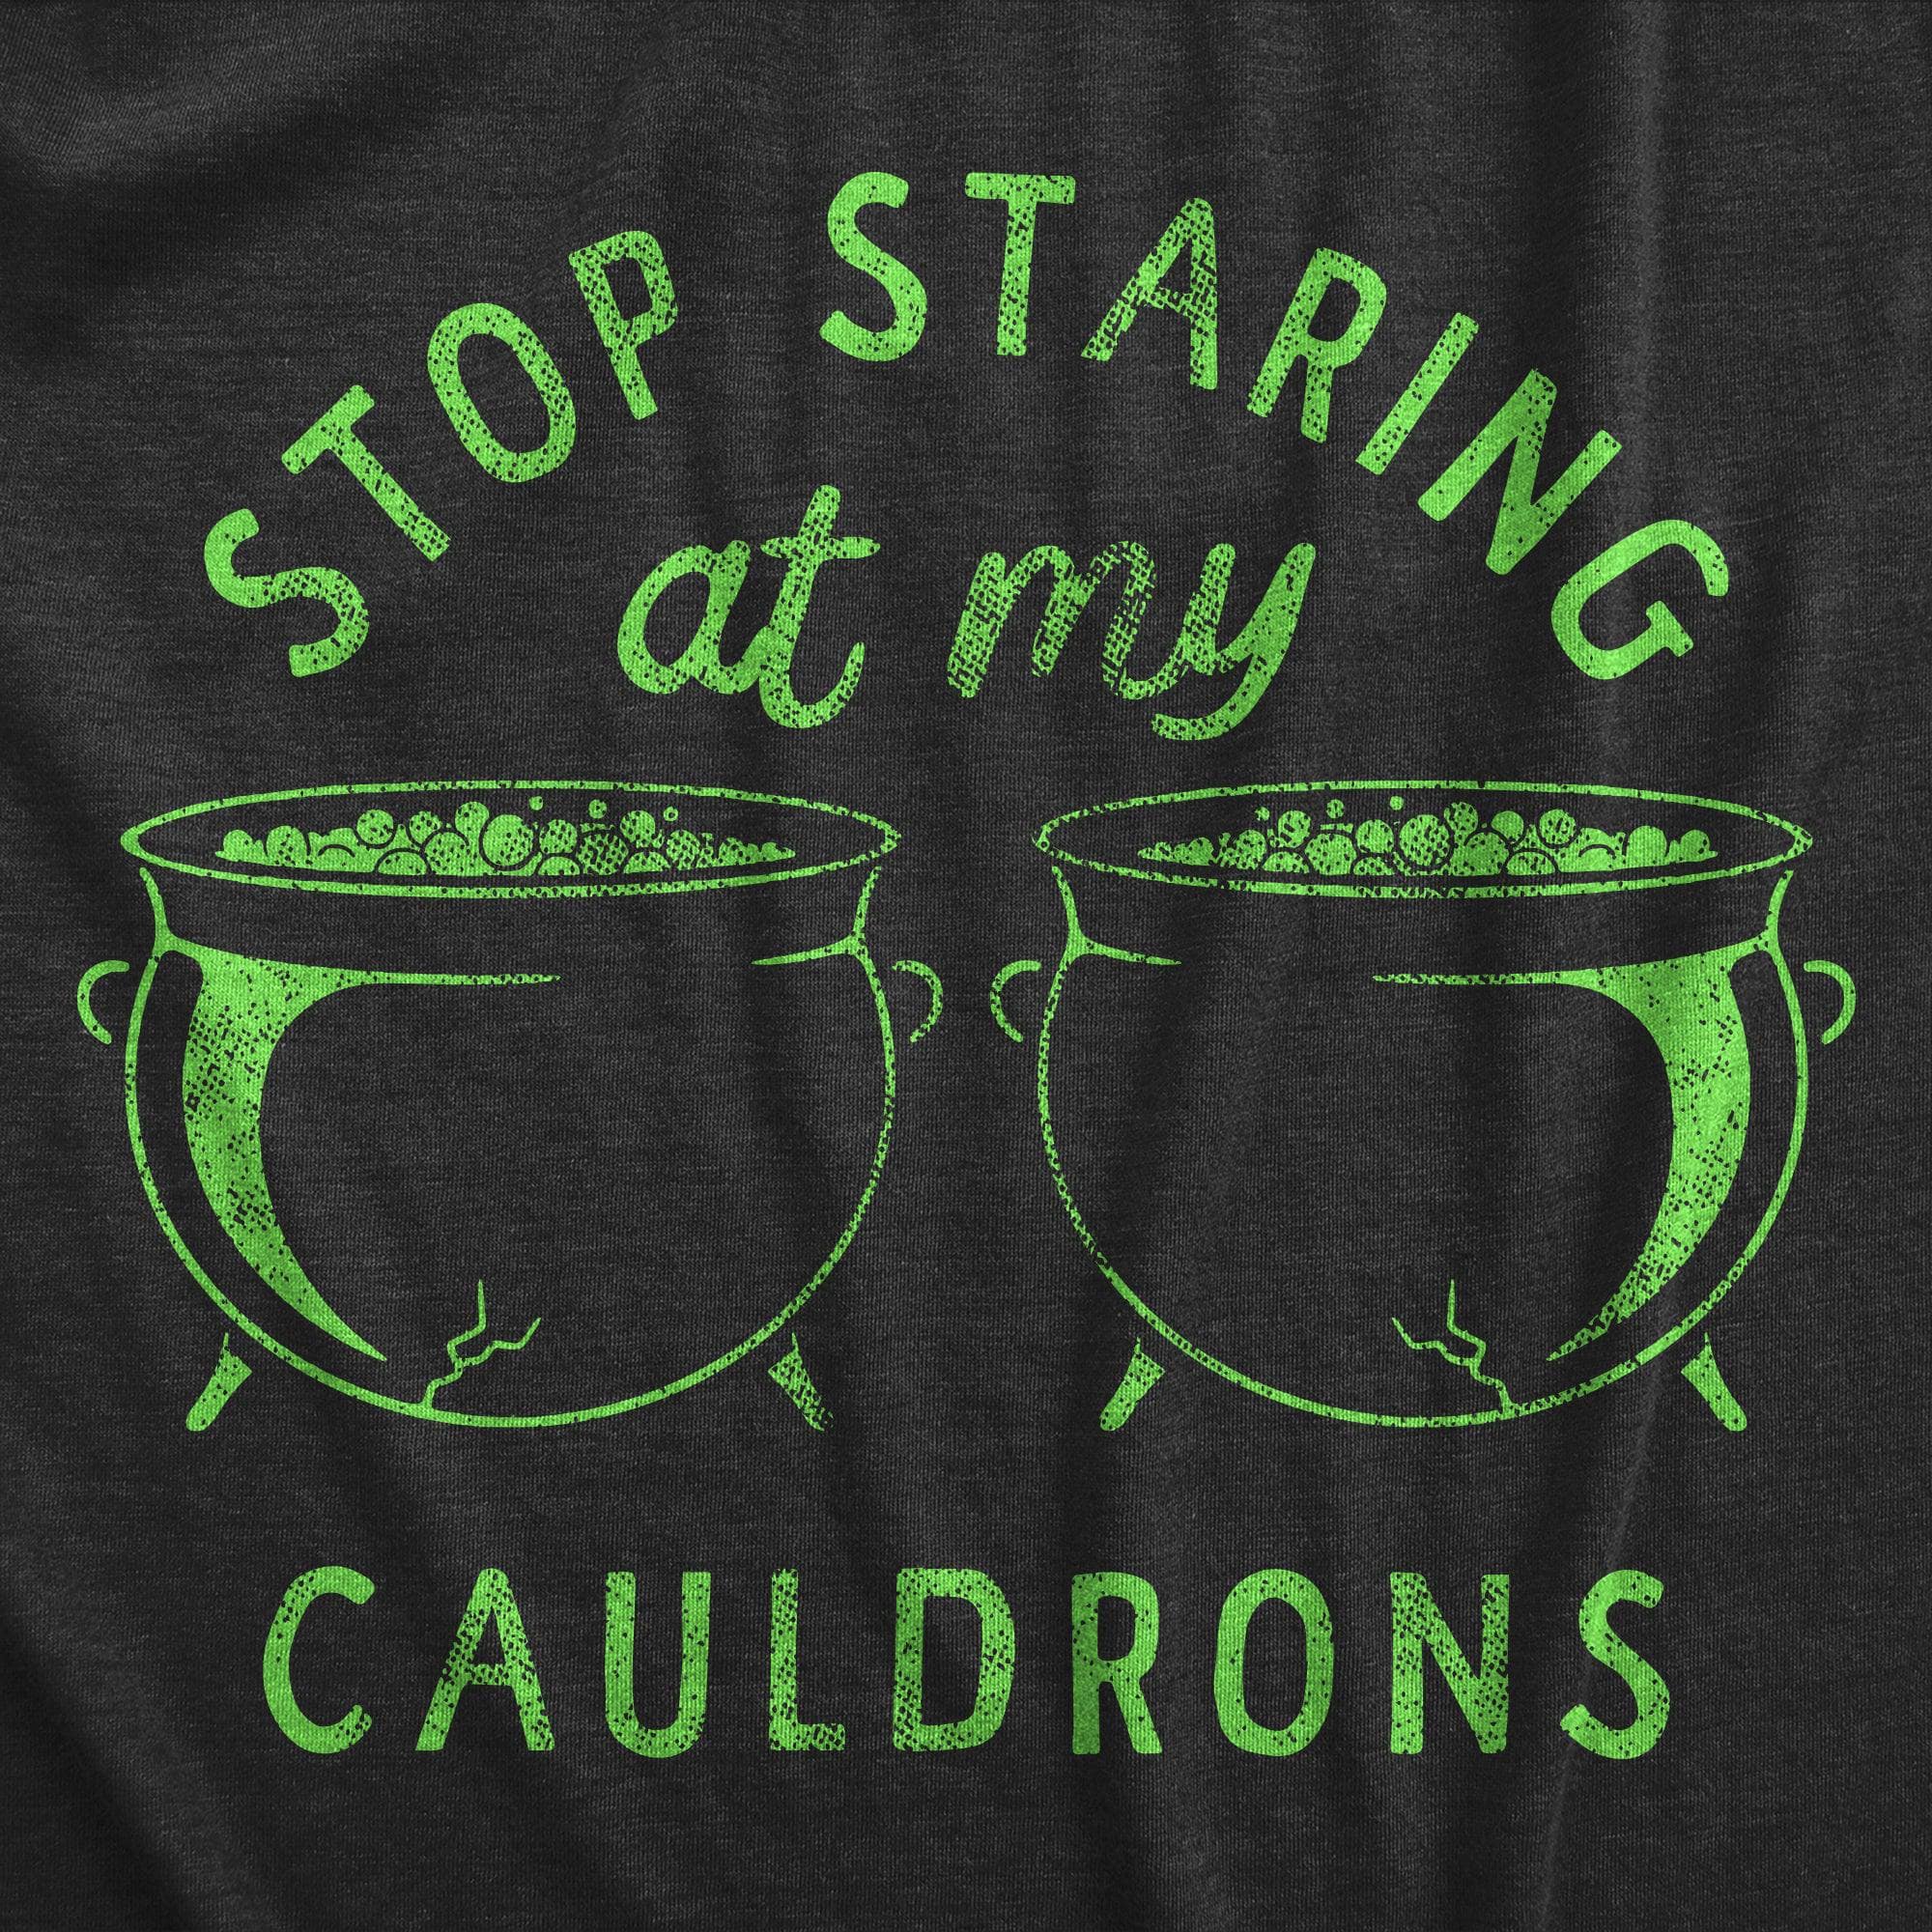 Stop Staring At My Cauldrons Women's Tshirt  -  Crazy Dog T-Shirts